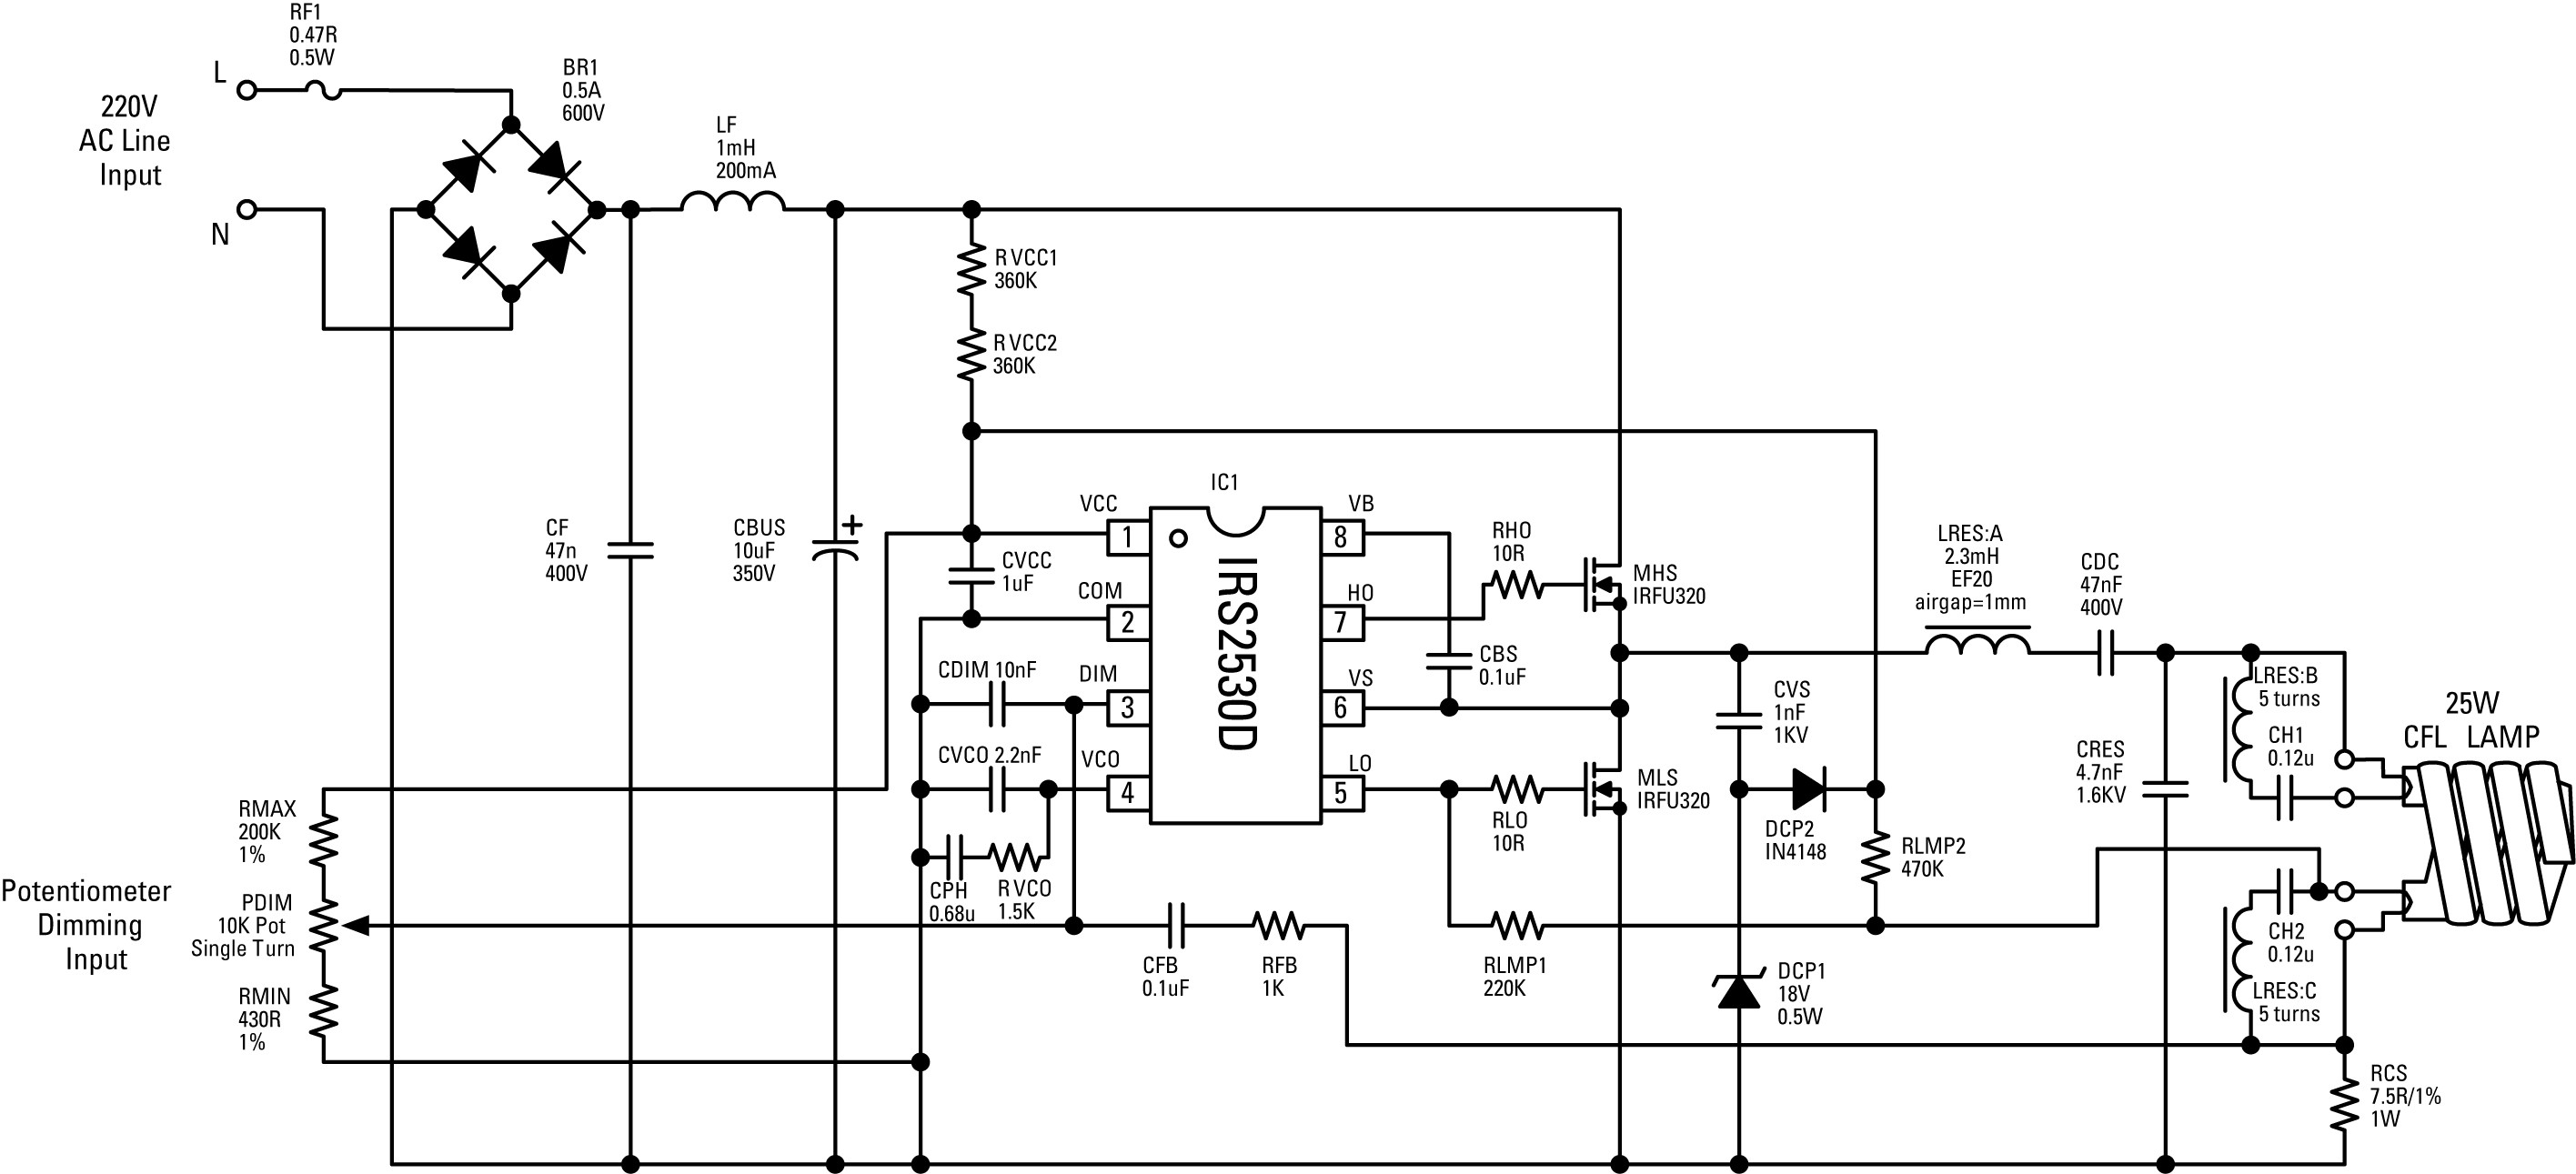 Fluorescent Lamp Circuit Diagram Zen Electrical Diagram